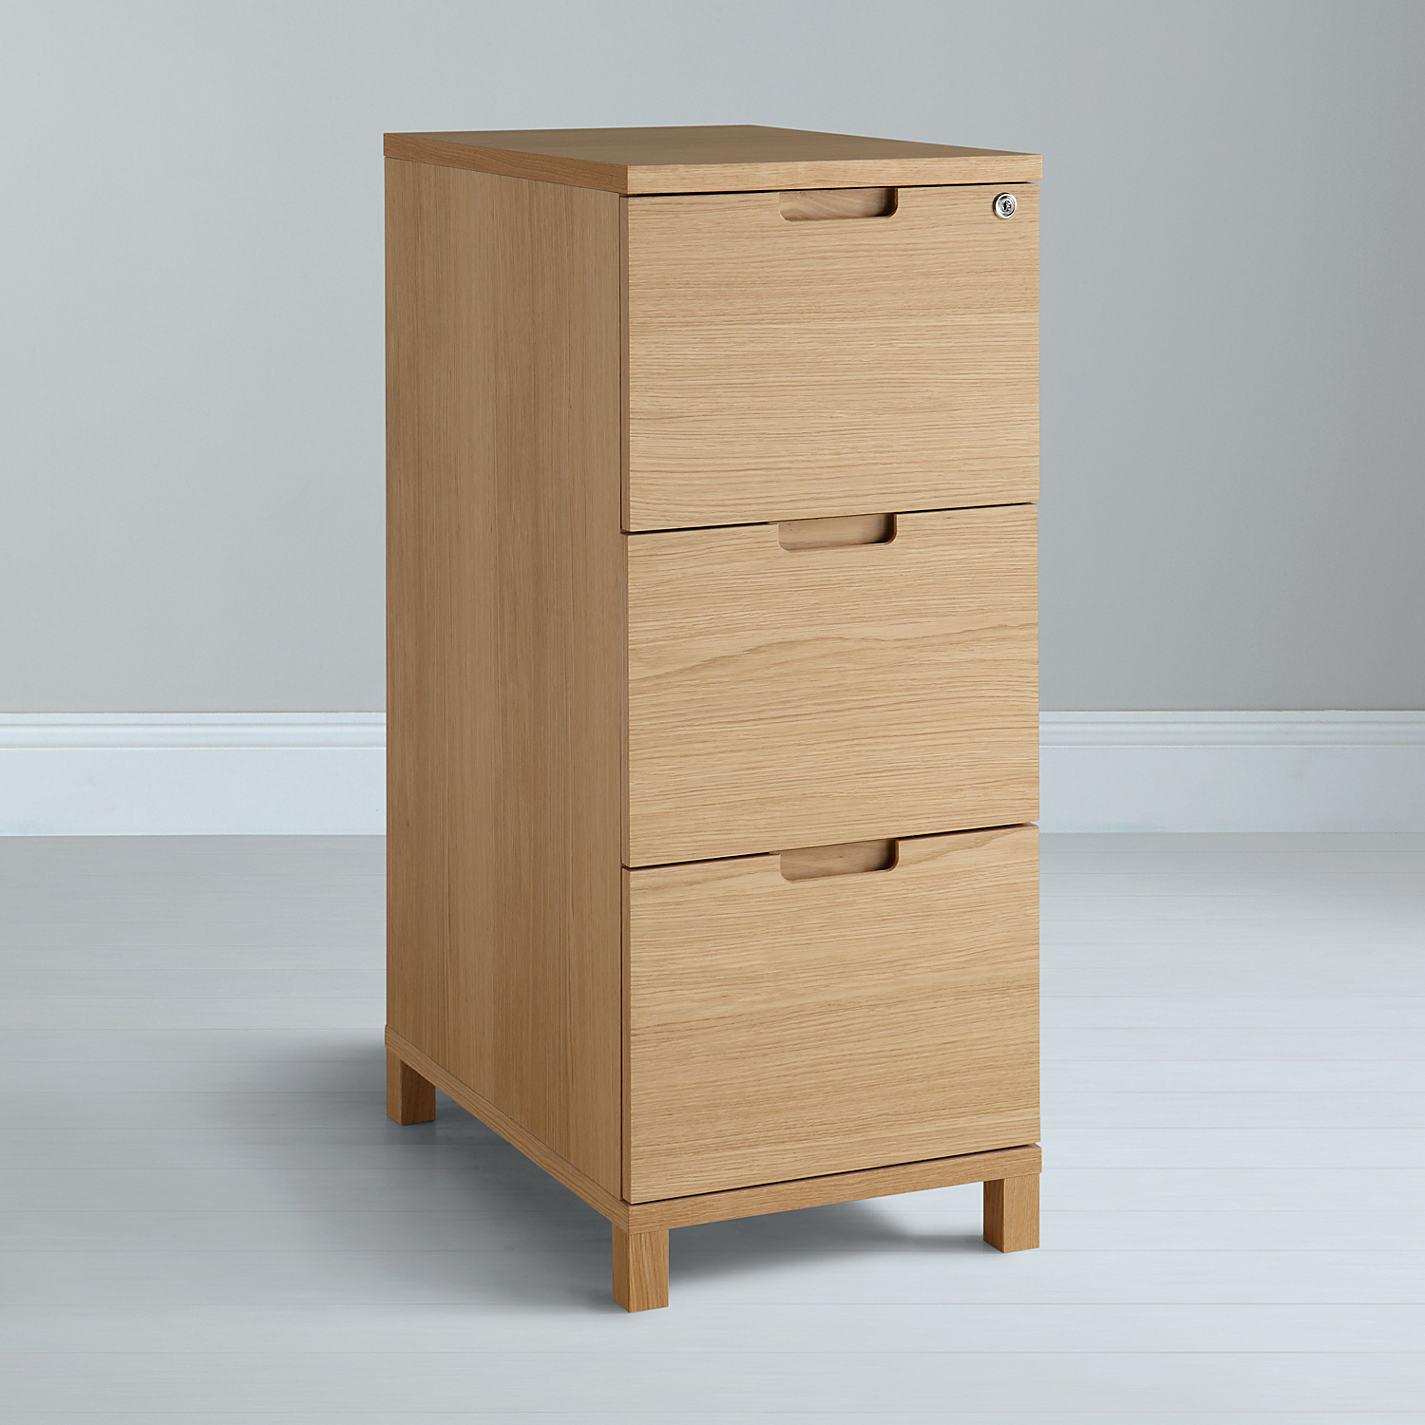 Good 3 Drawer File Cabinet Fibi Ltd Home Ideas for dimensions 1425 X 1425